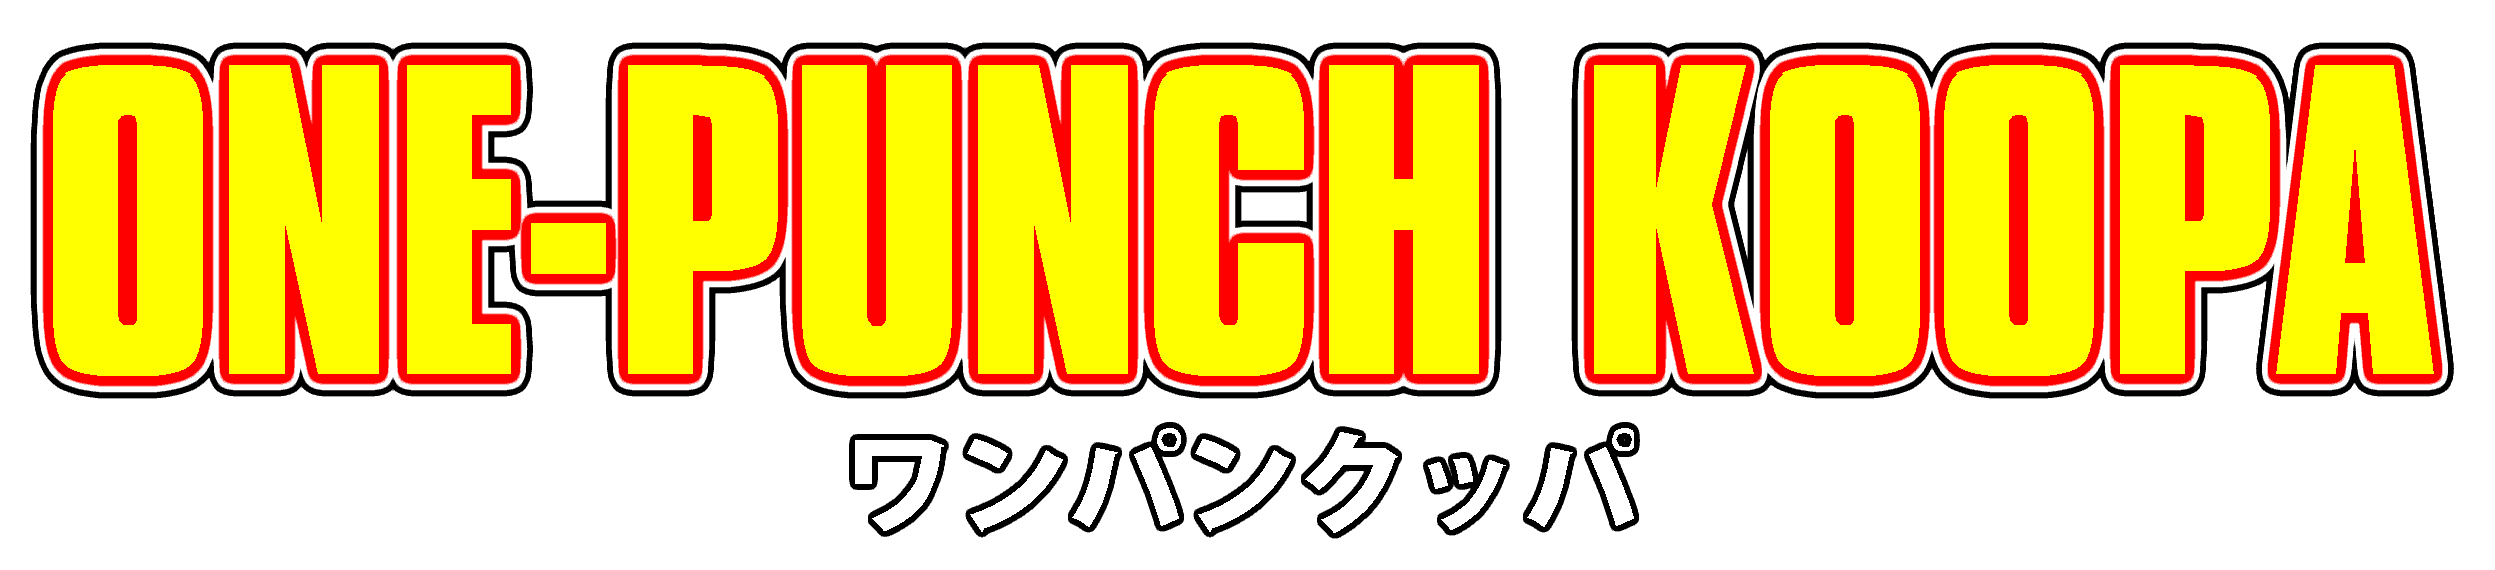 Koopa Logo - One-Punch Koopa Logo by AsylusGoji91 on DeviantArt